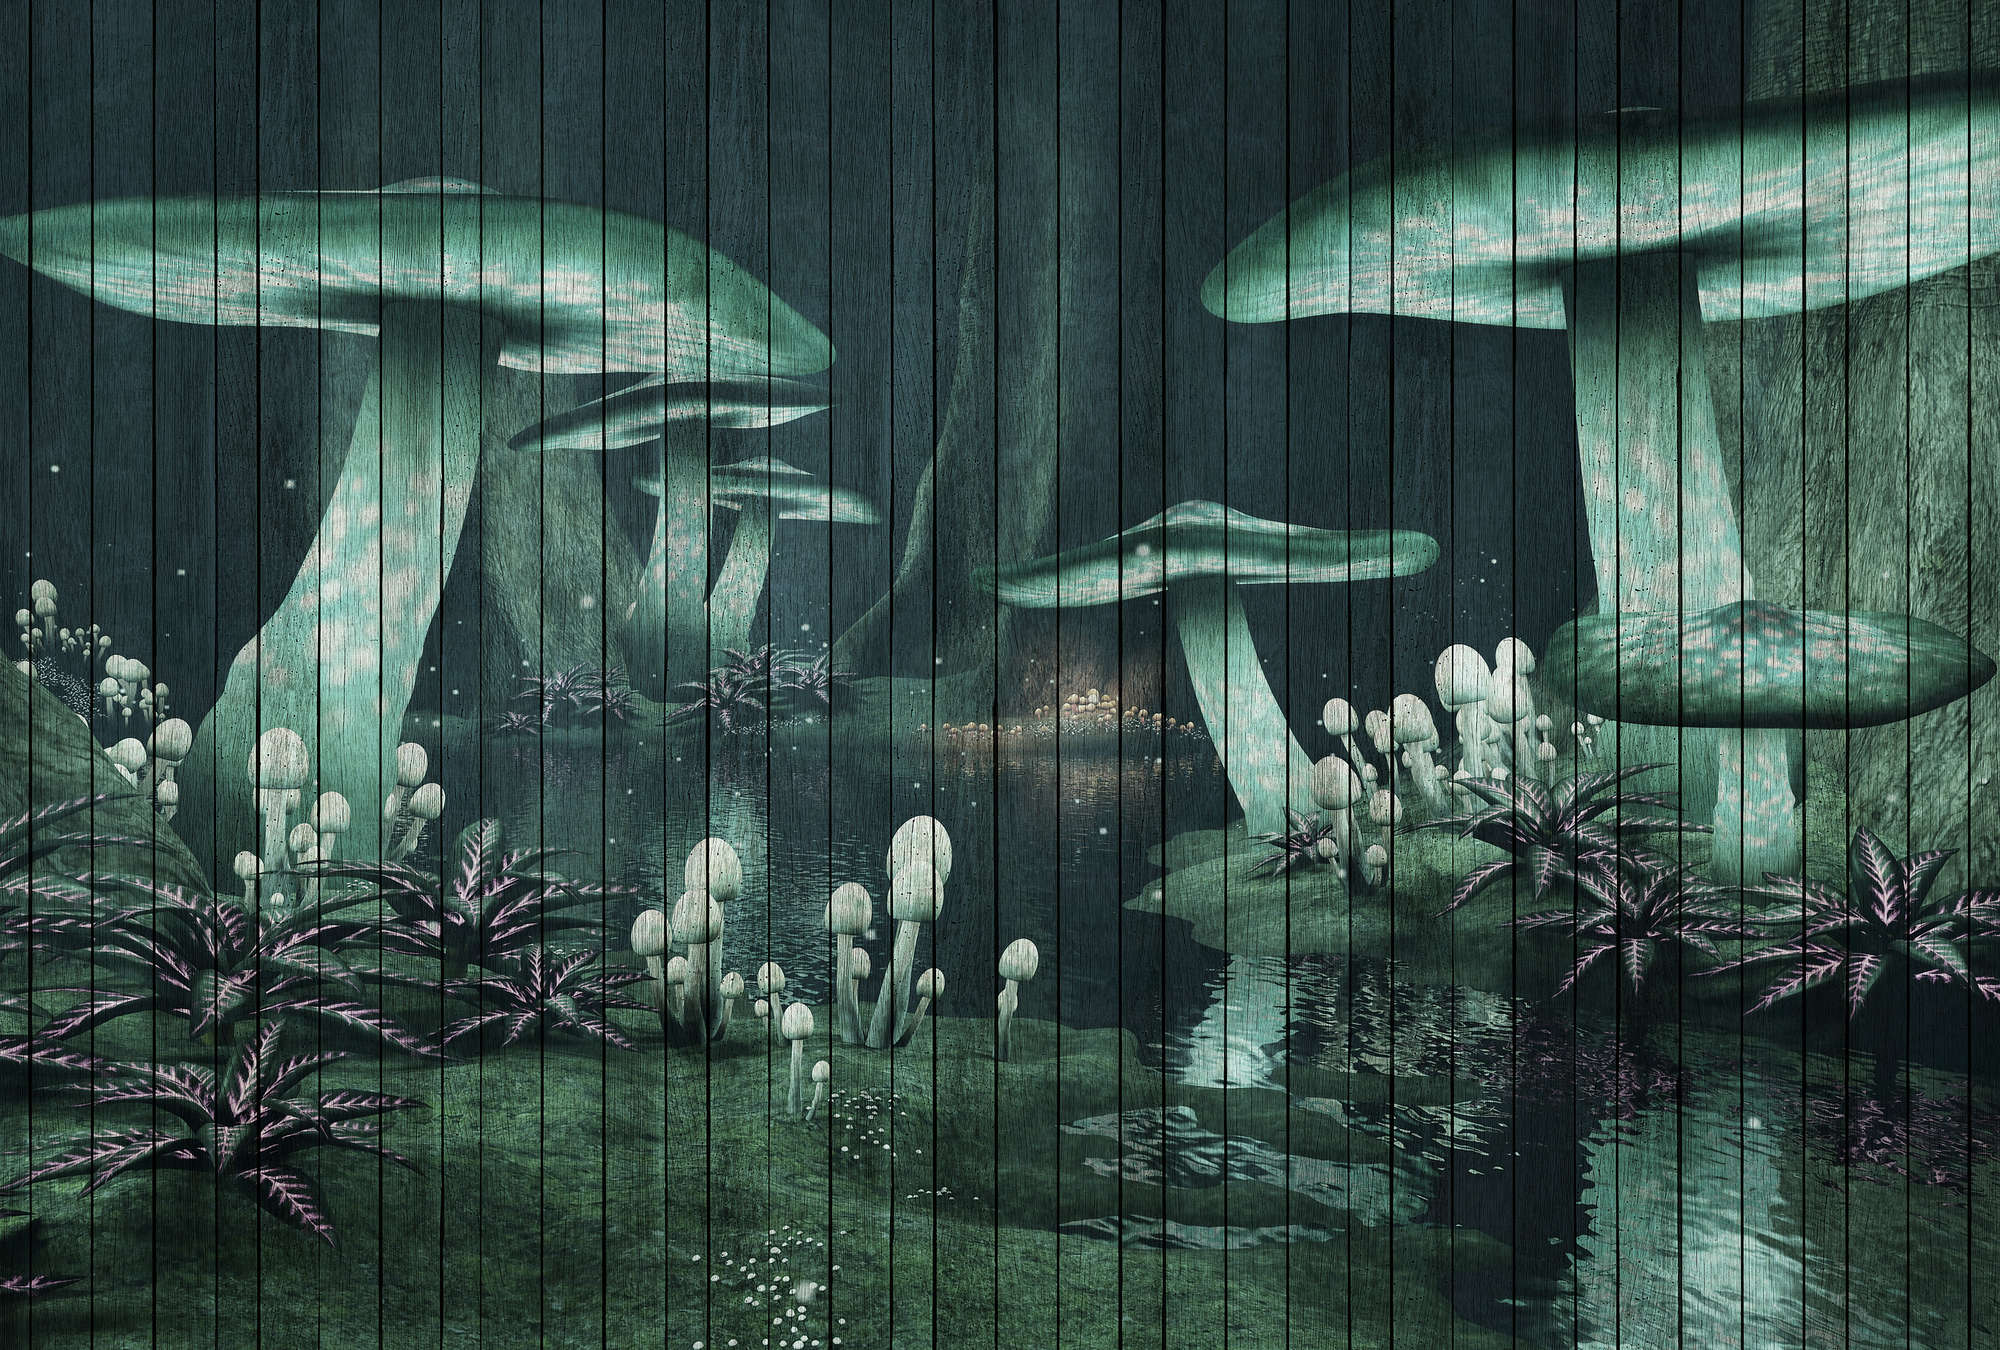             Fantasy 1 - Fotomurali Foresta incantata con effetto legno - Verde | Pile liscio Premium
        